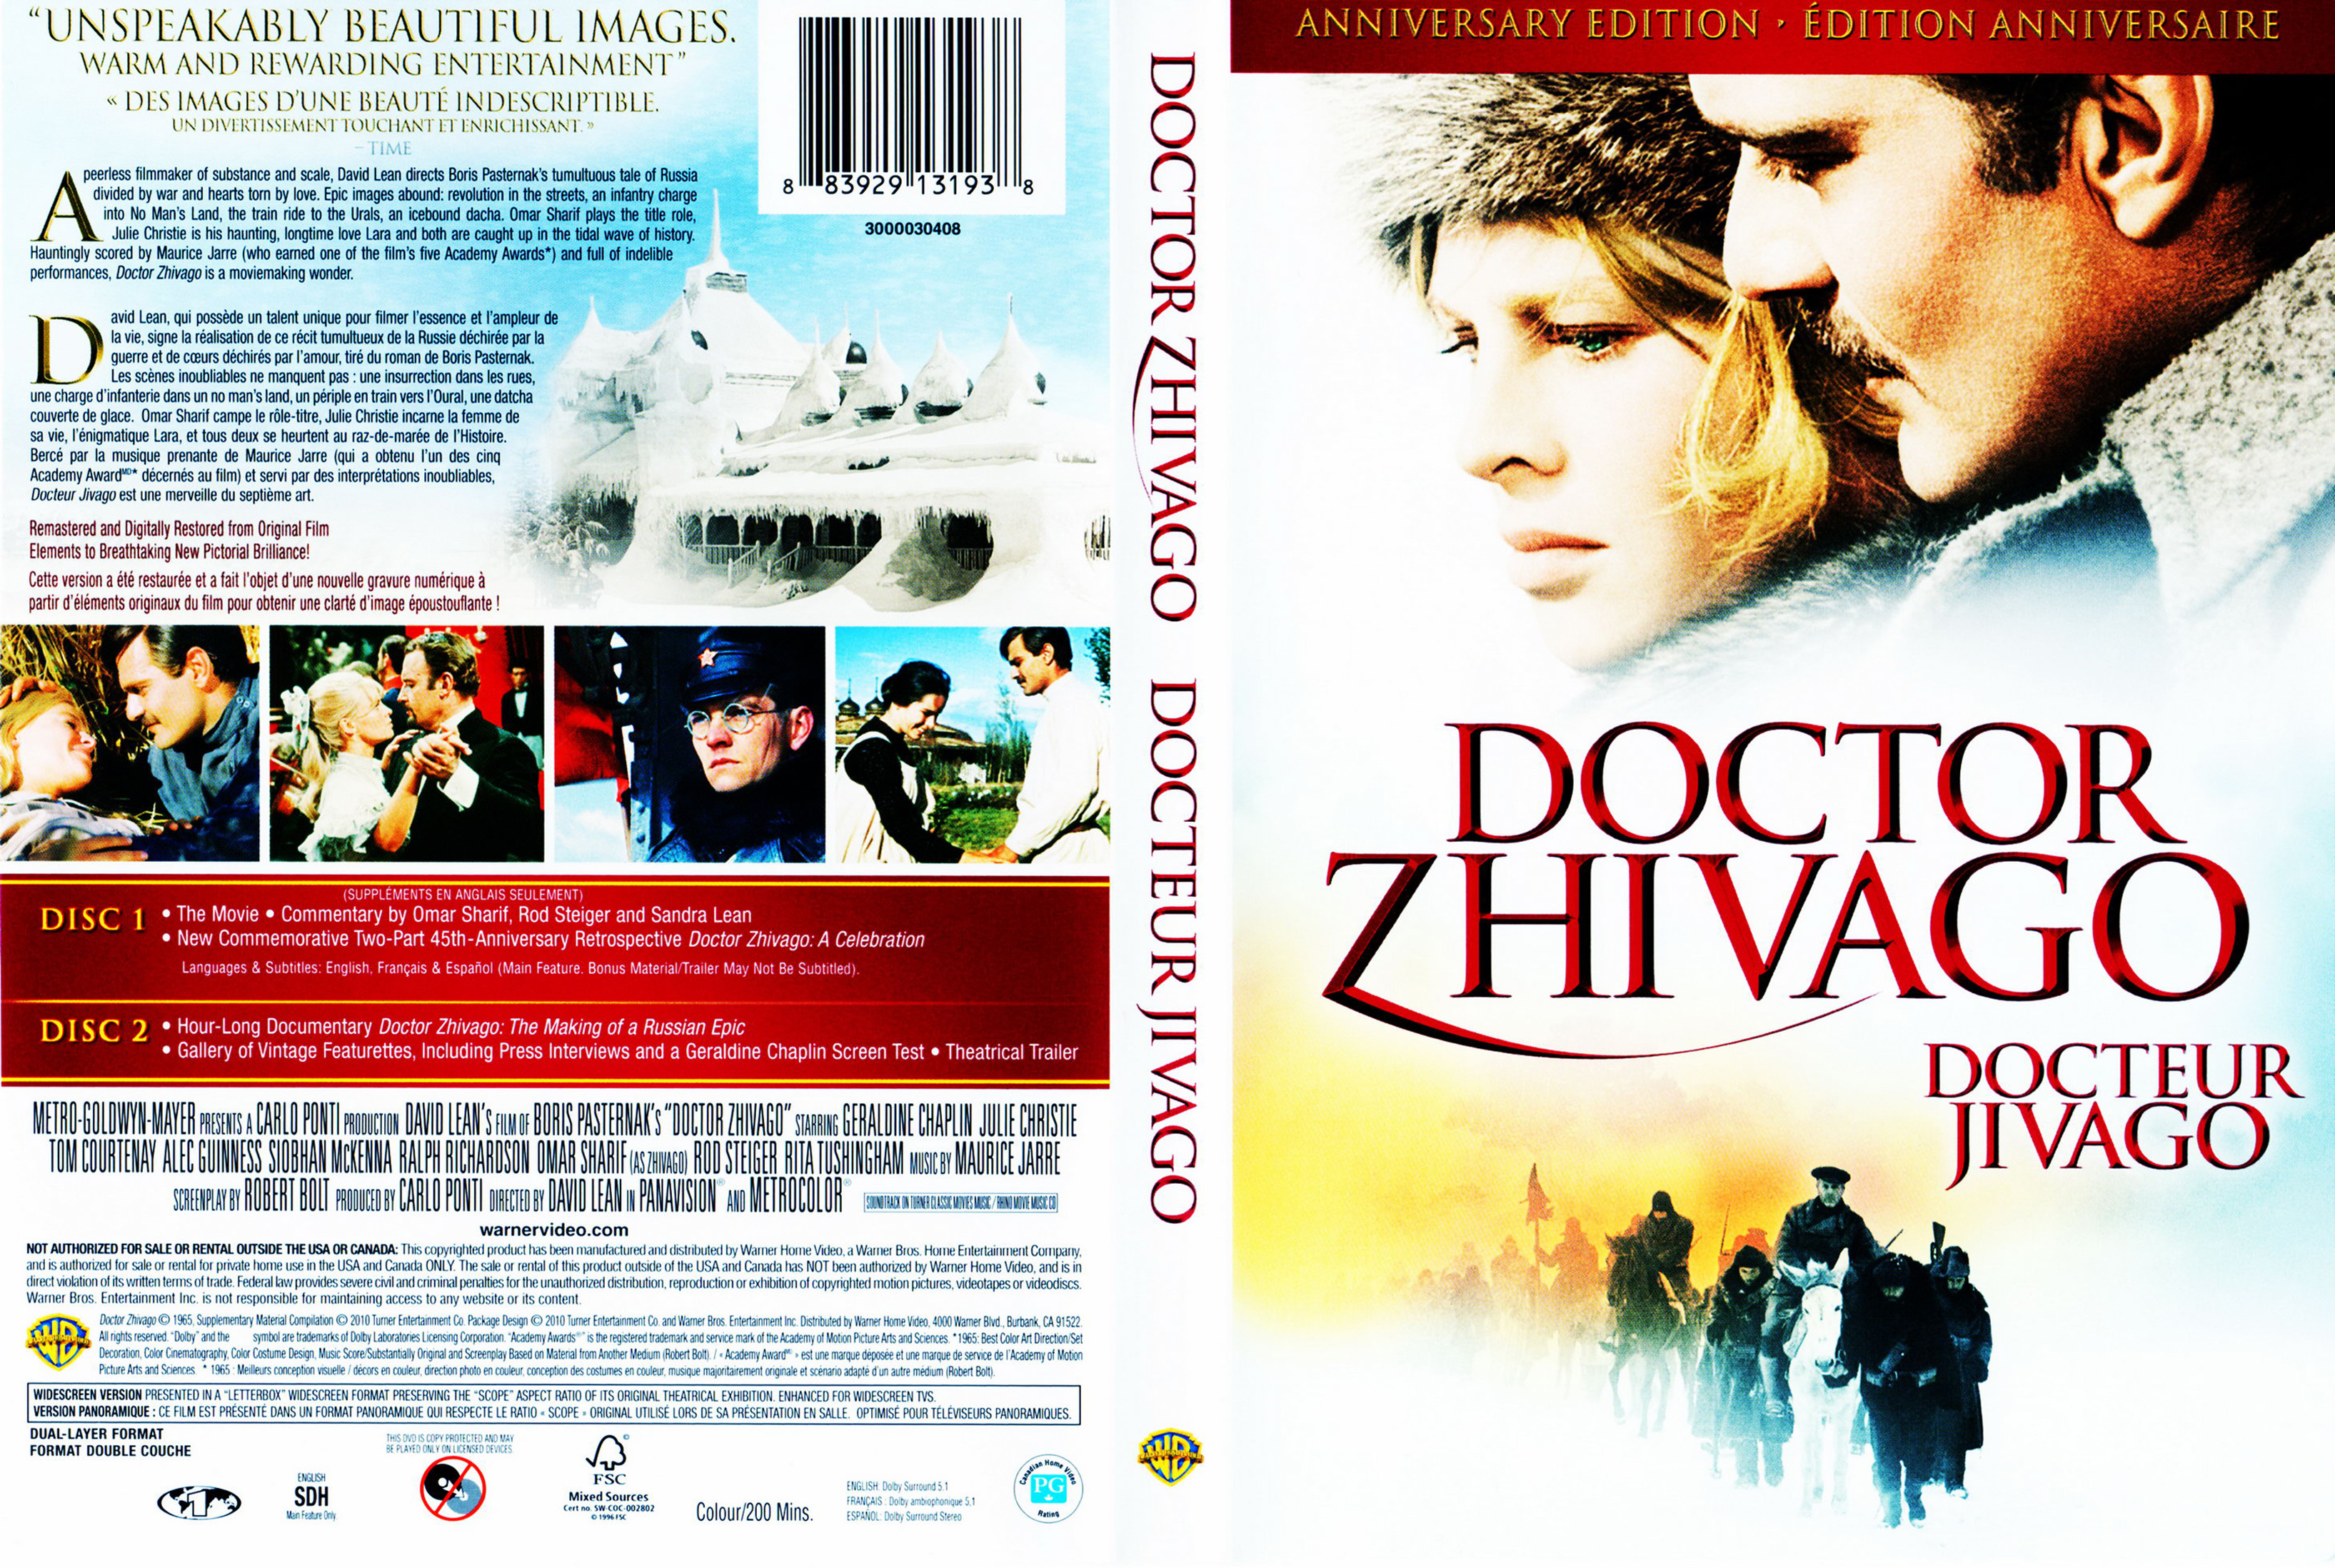 Jaquette DVD Doctor Zhivago - Docteur Jivago (Canadienne)